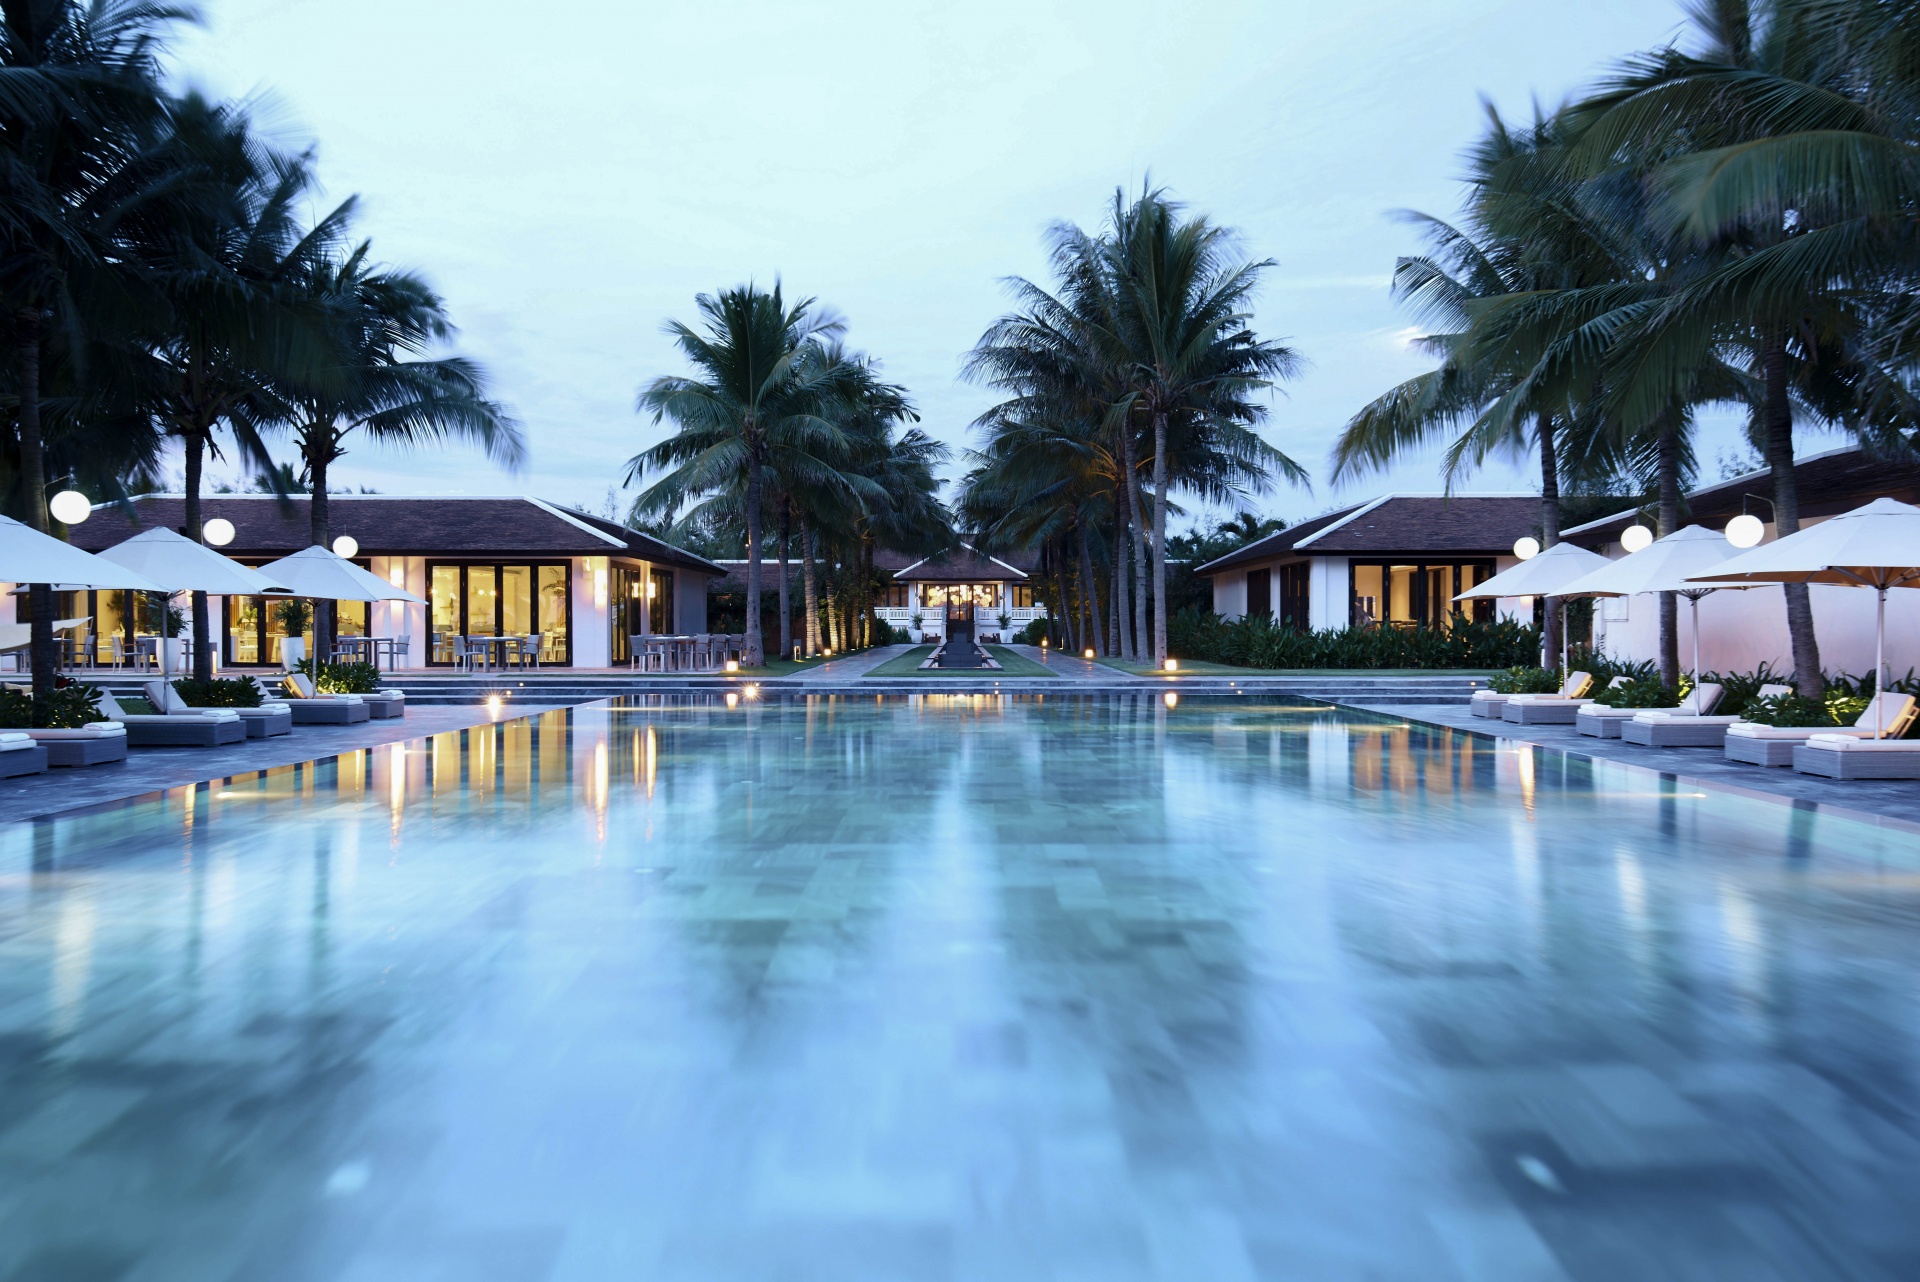 TIA wellness Resort elevates well-being within Vietnam